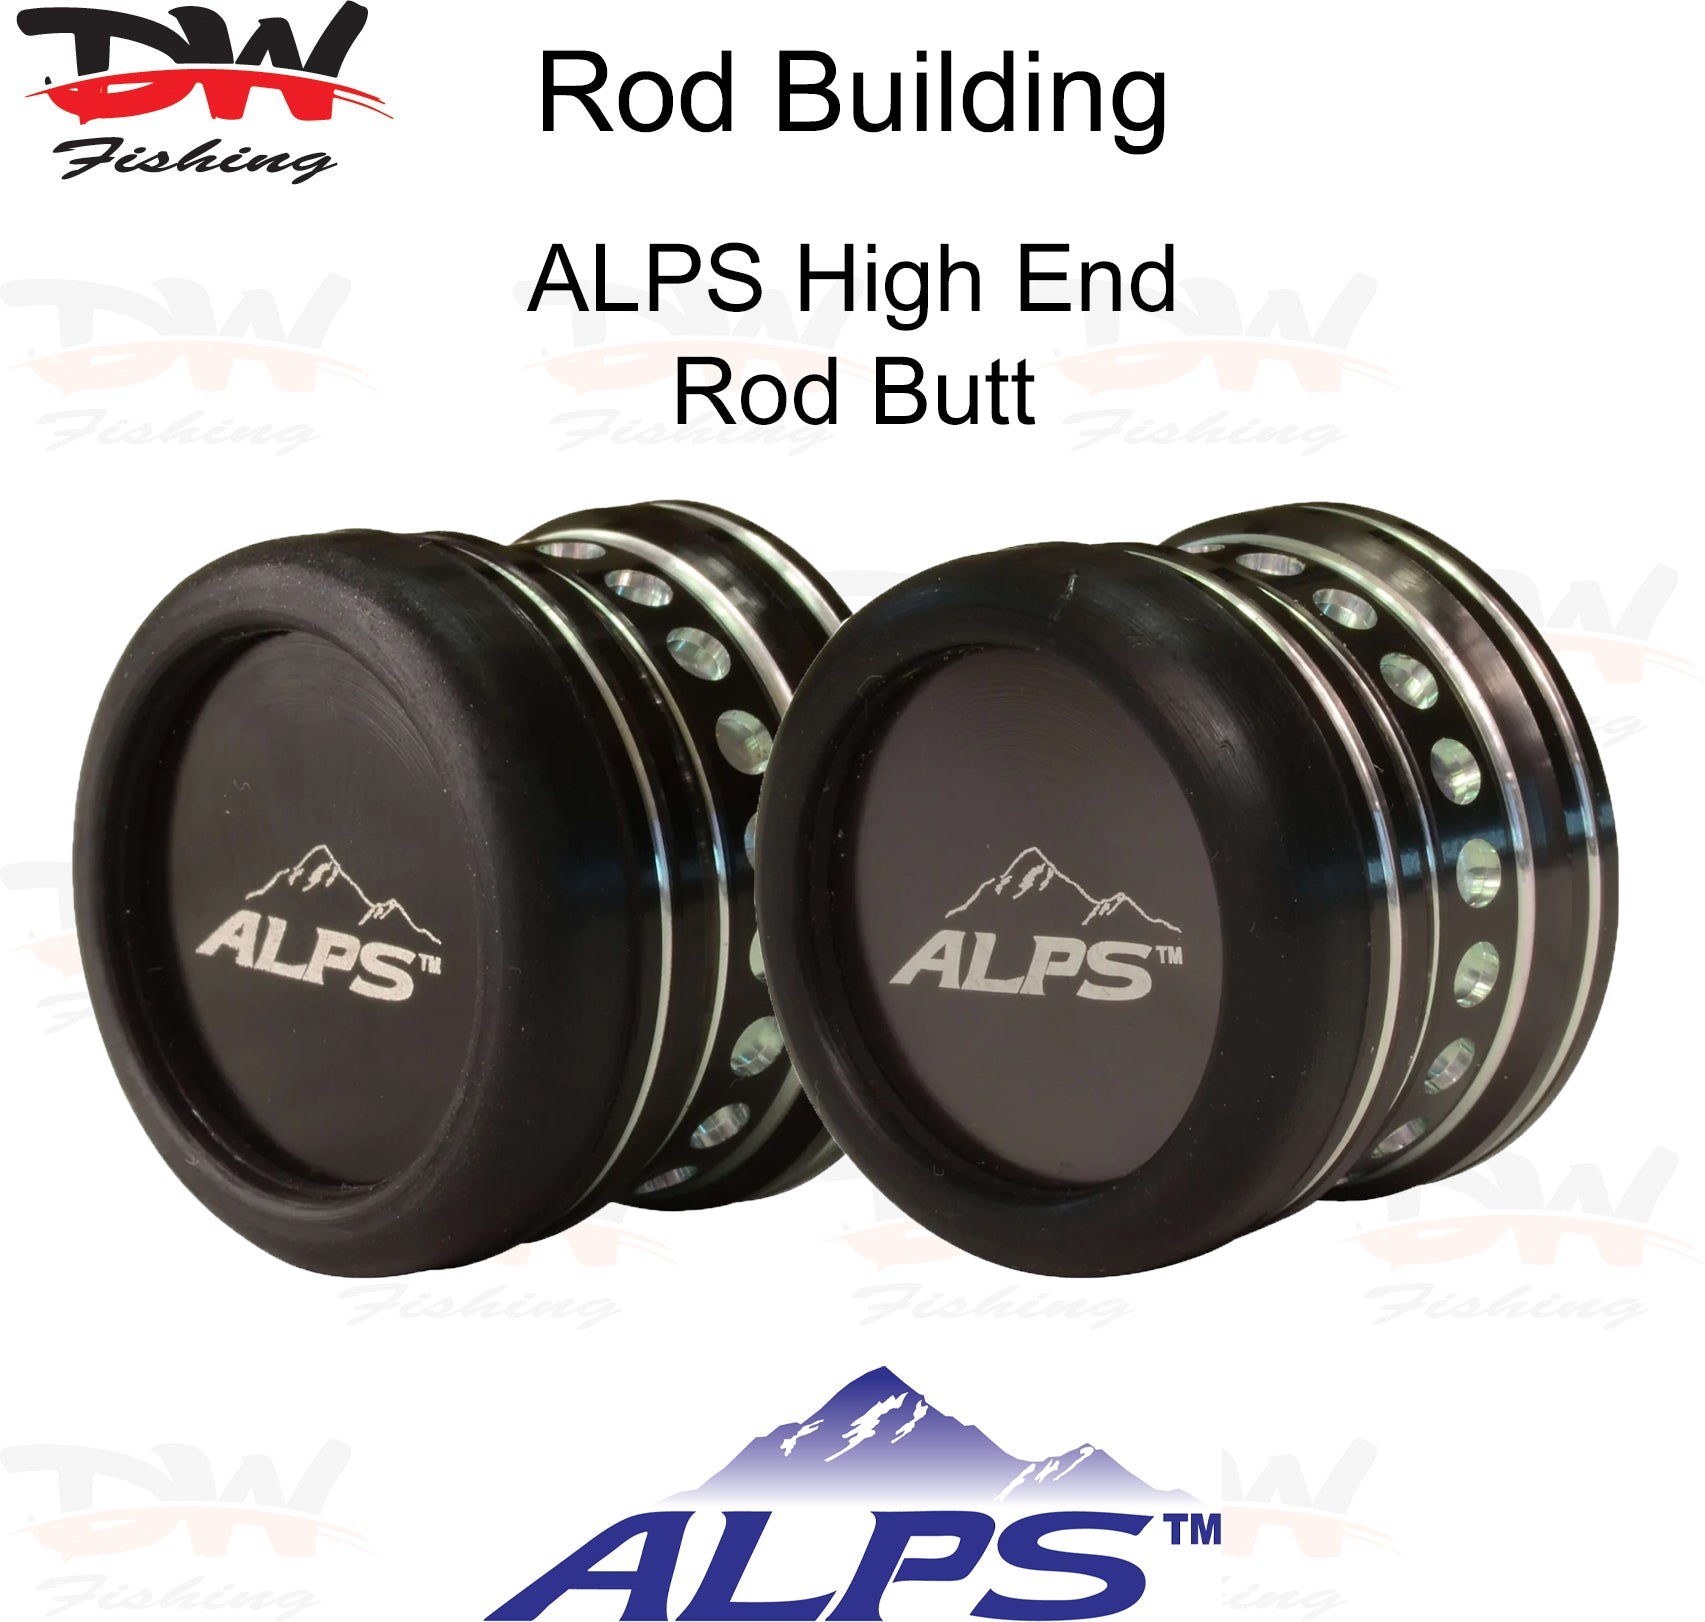 ALPS High End Rod Butt Cap, Rod Building